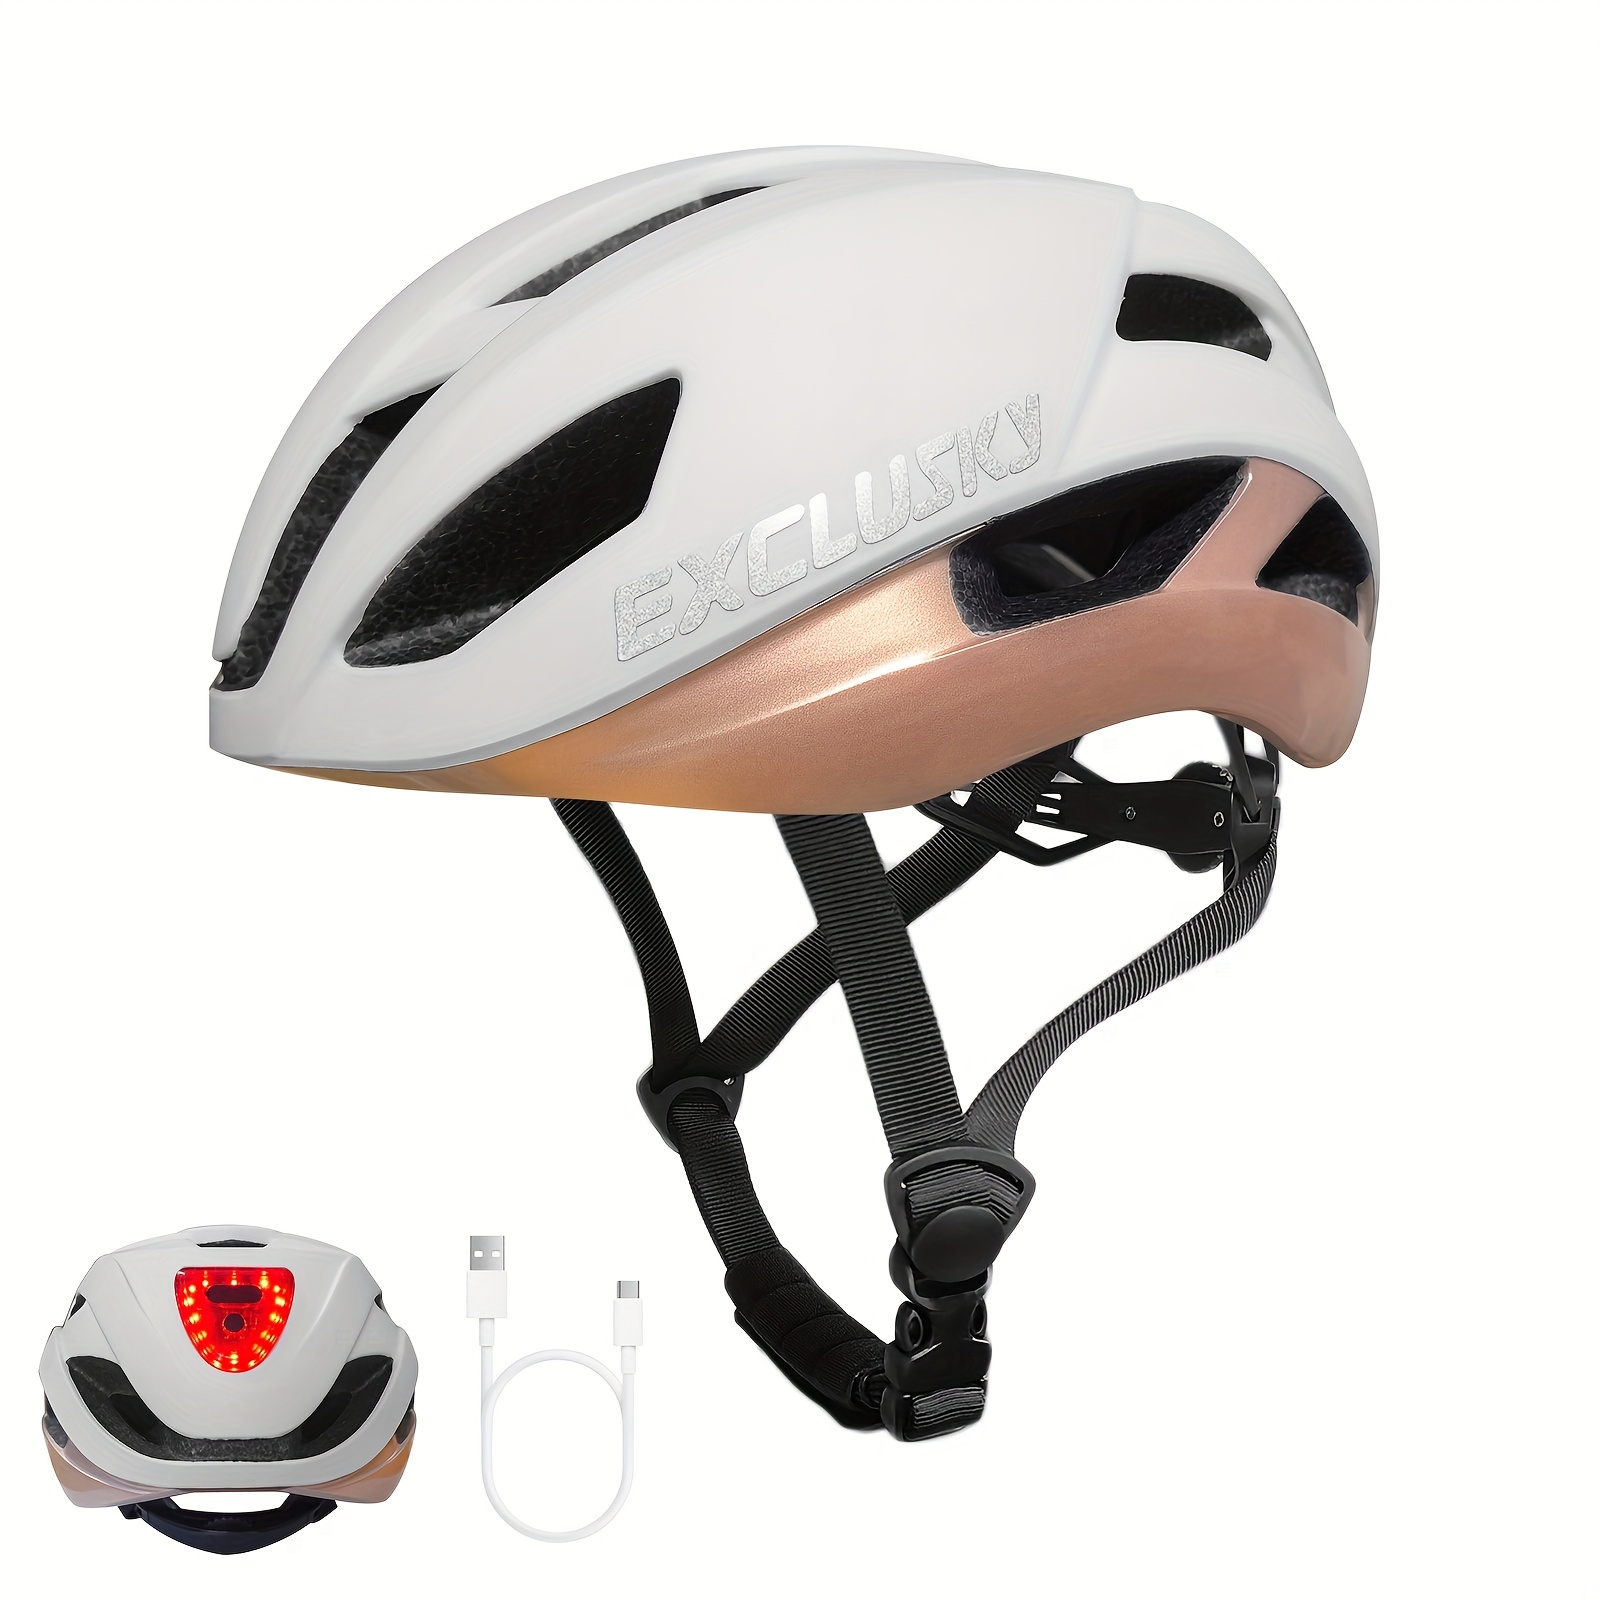 Cascos de cara completa para niños, casco de bicicleta MTB Mountain BMX  Multi-Sport desmontable de niños pequeños a jóvenes, certificado CPSC